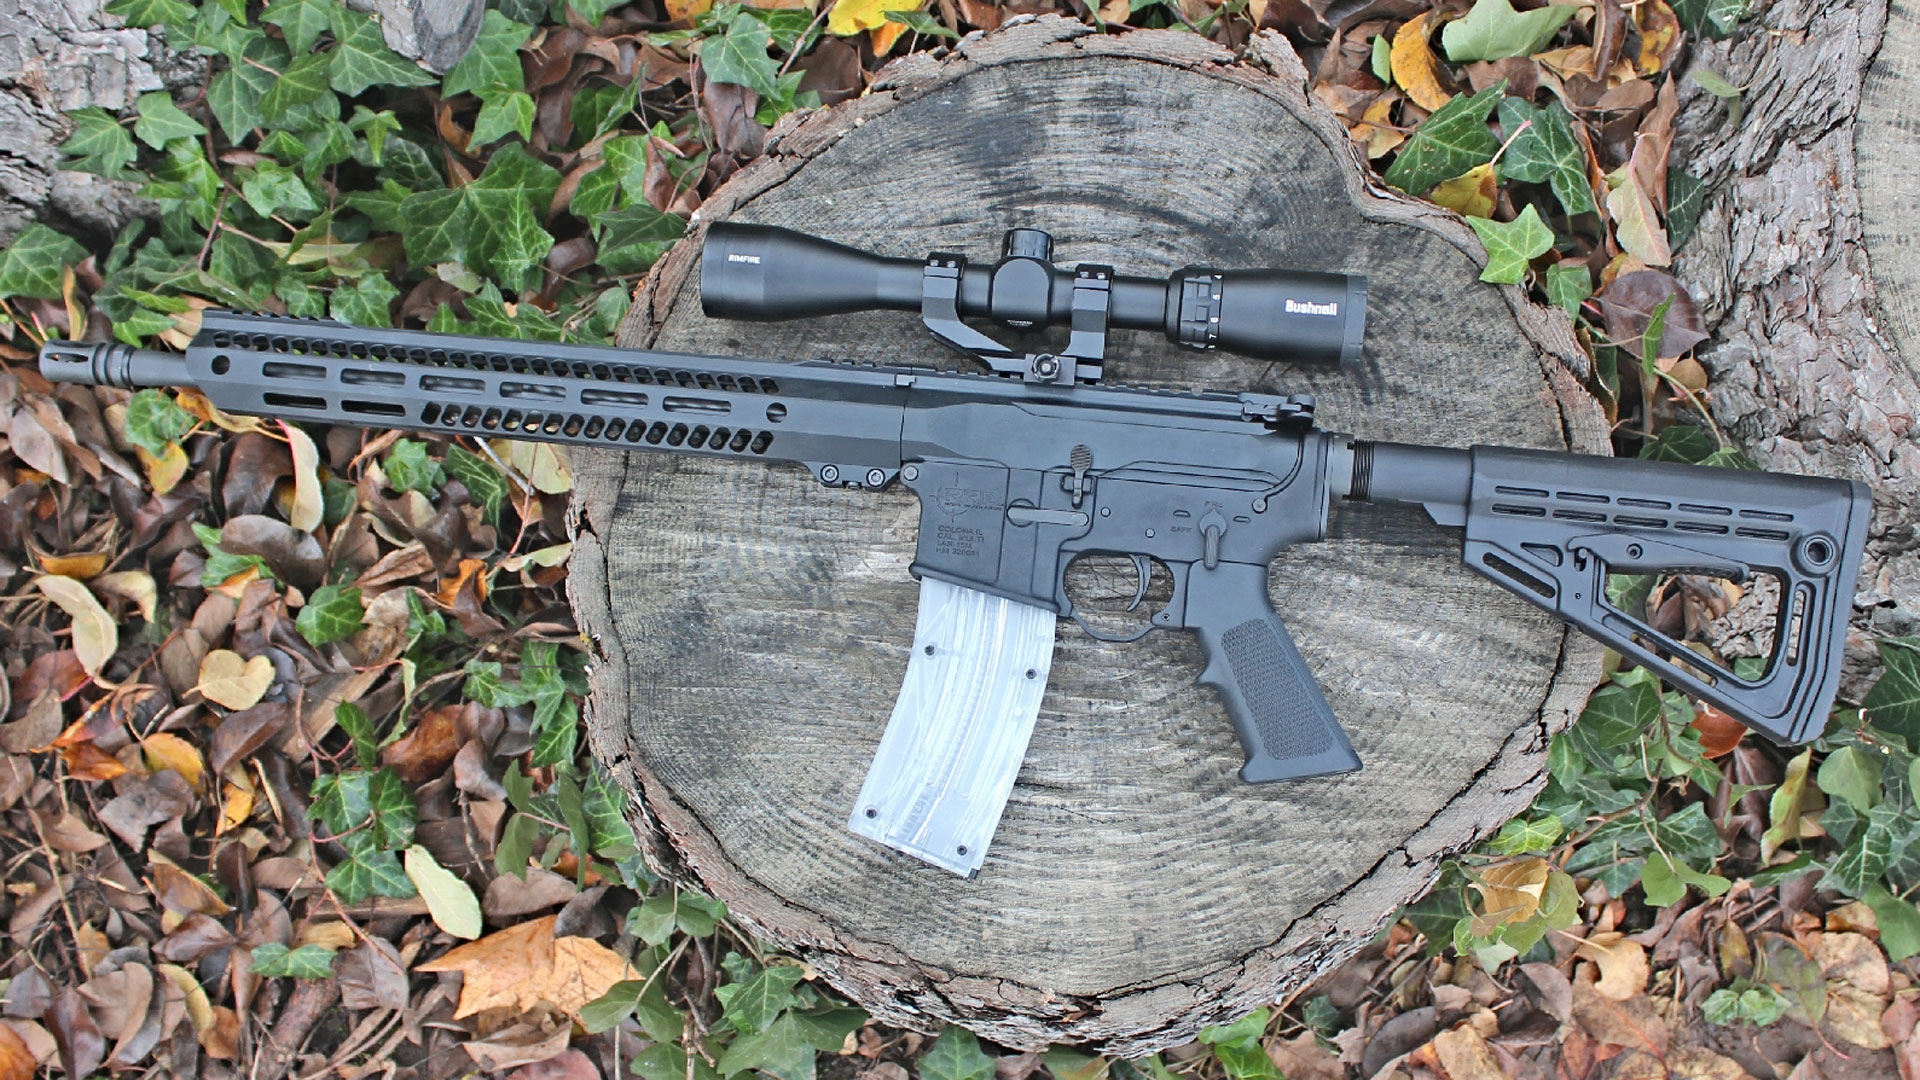 Review: Rock River Arms LAR-22 Rimfire Carbine | An Official 